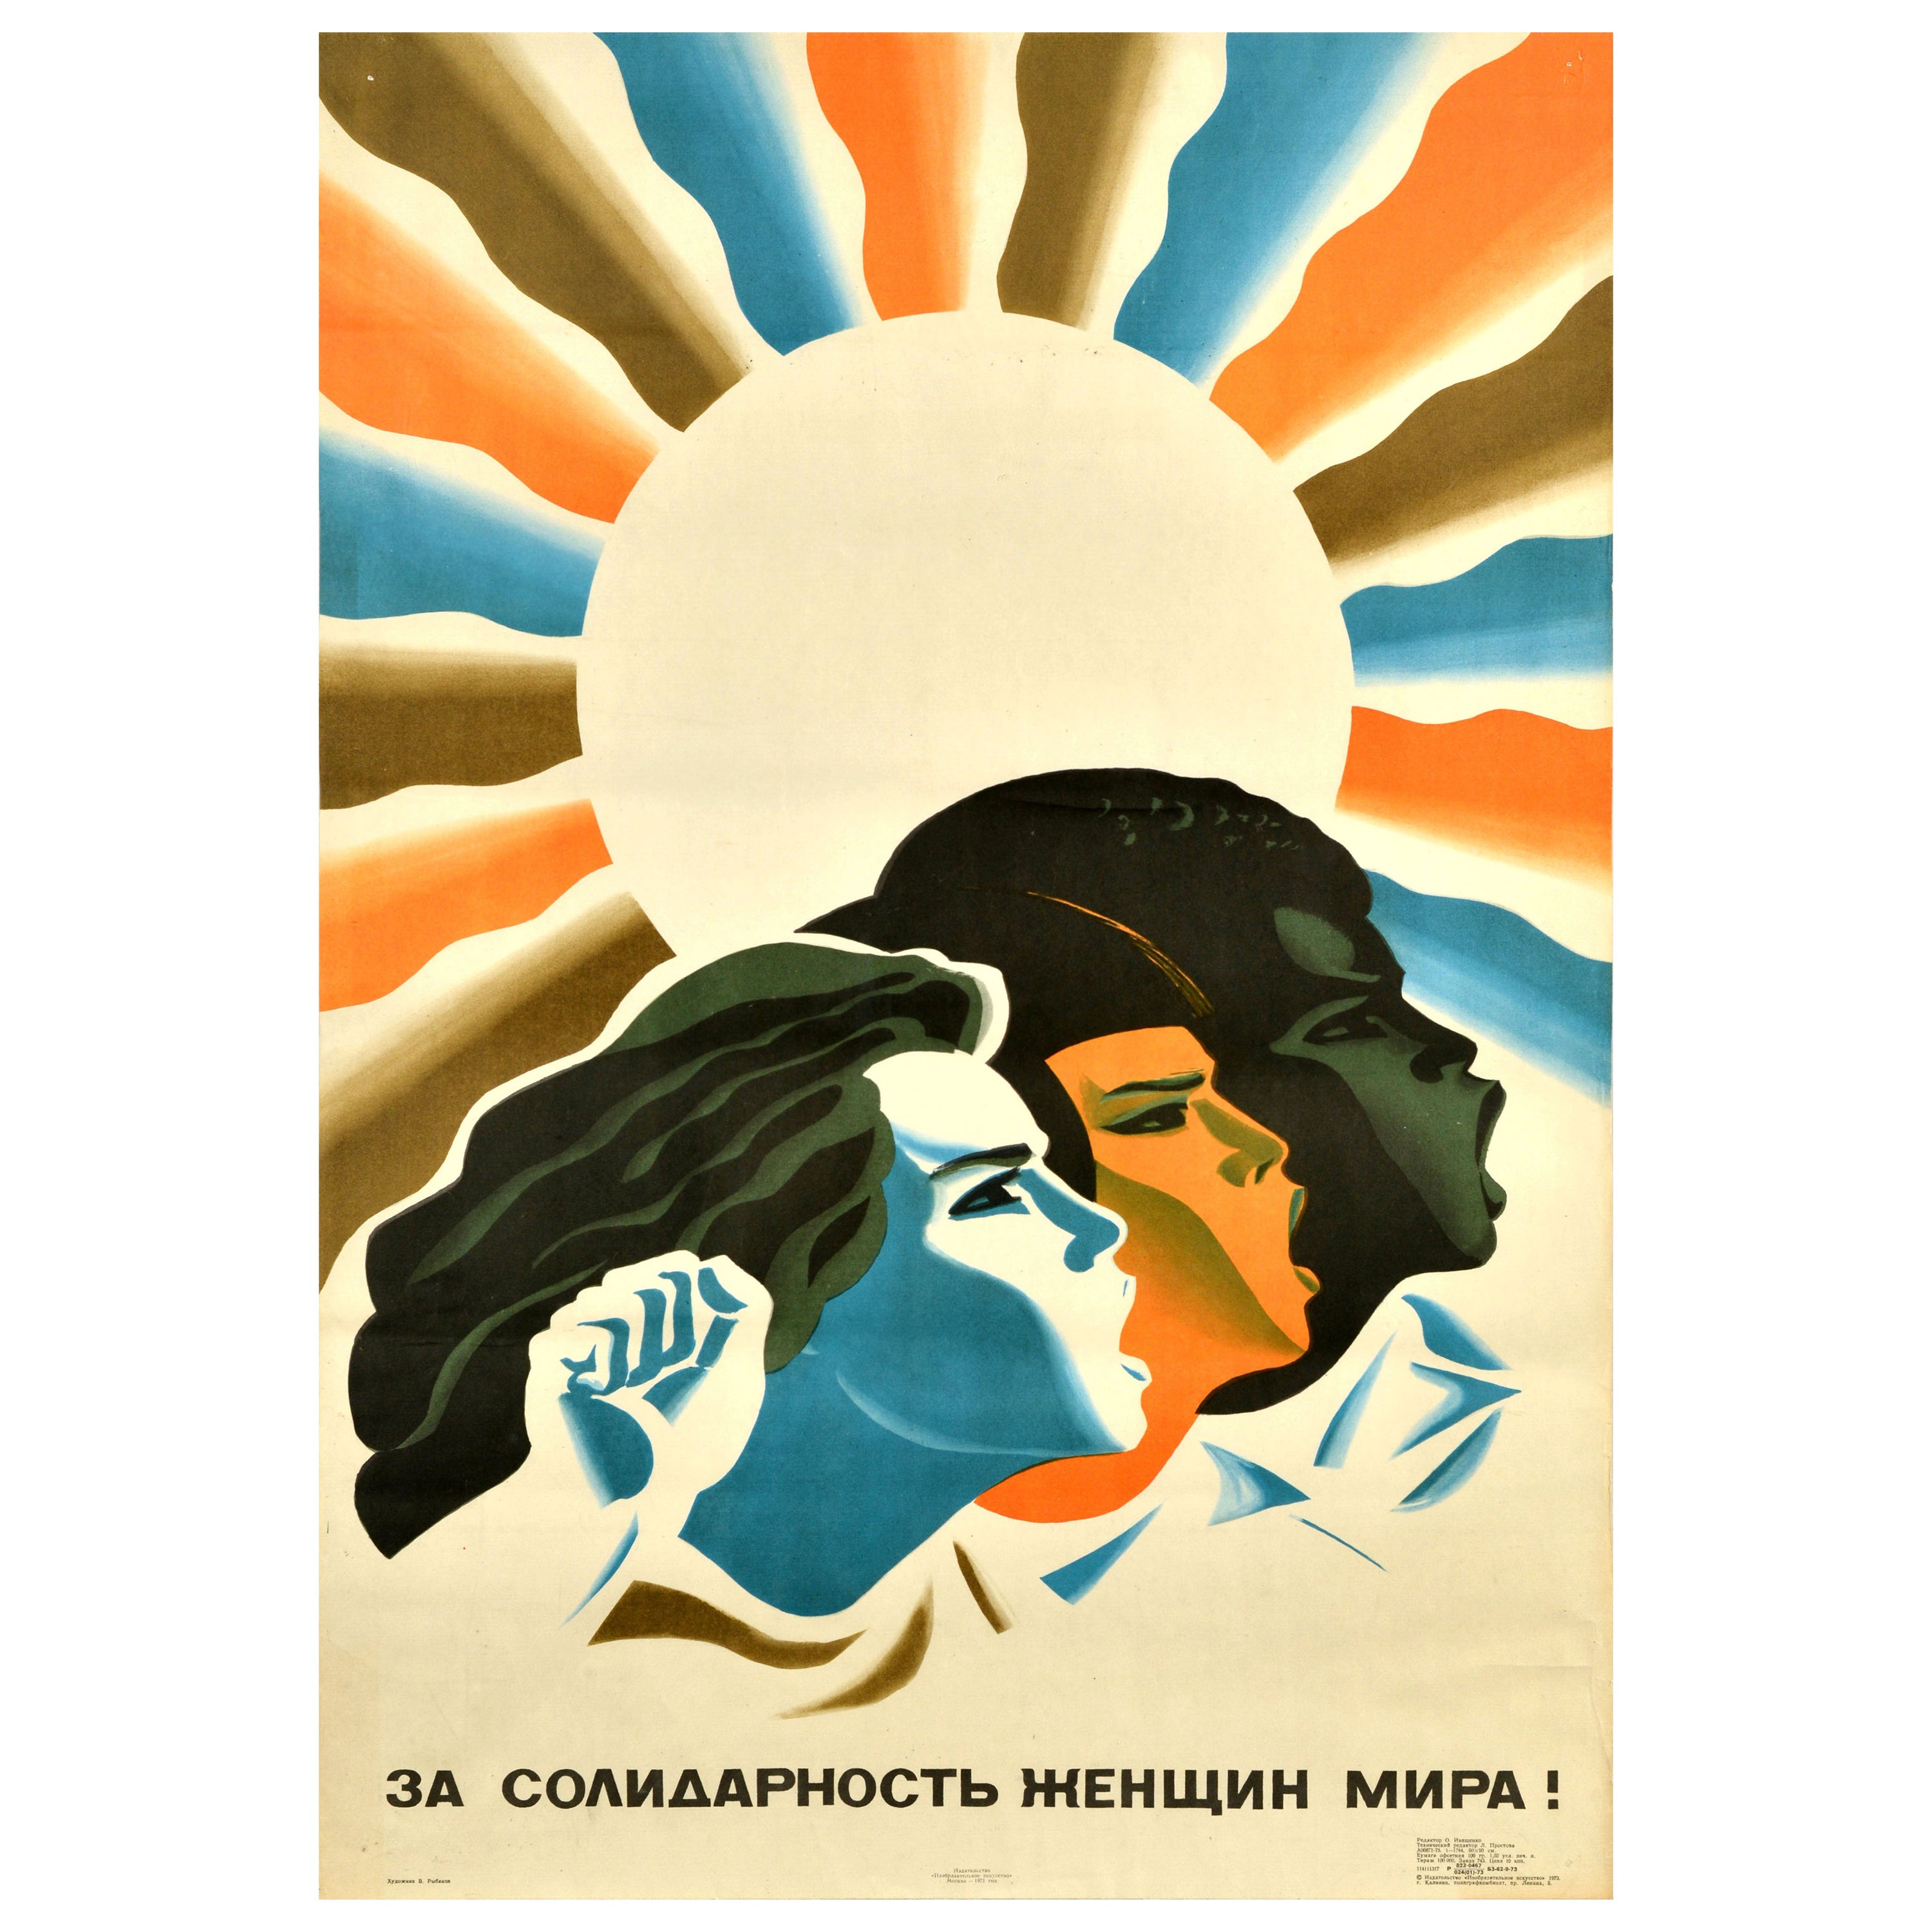 Originales Original-Vintage-Propagandaplakat der Sowjetischen Union, Frauen Solidarity, Feminismus, UdSSR im Angebot